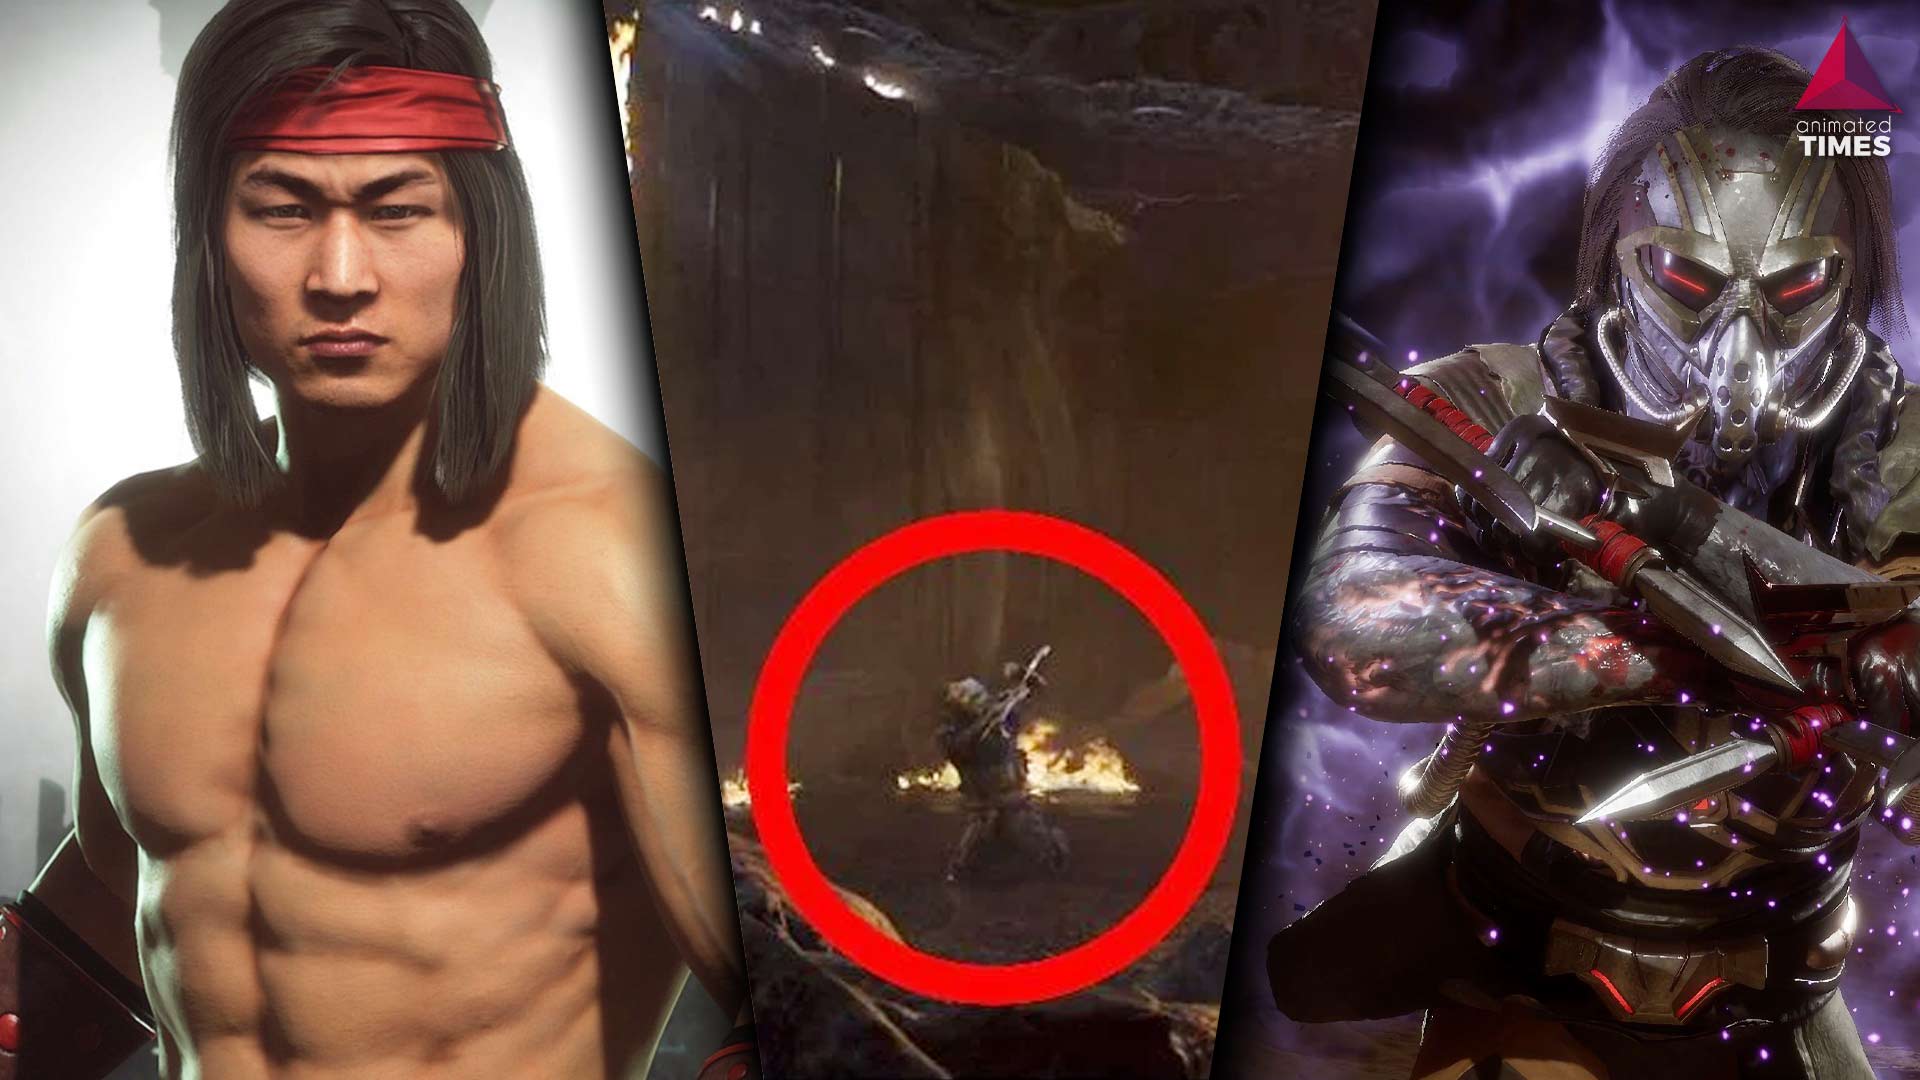 The New Mortal Kombat Trailer Reveals Liu Kang vs Kabal Fatality